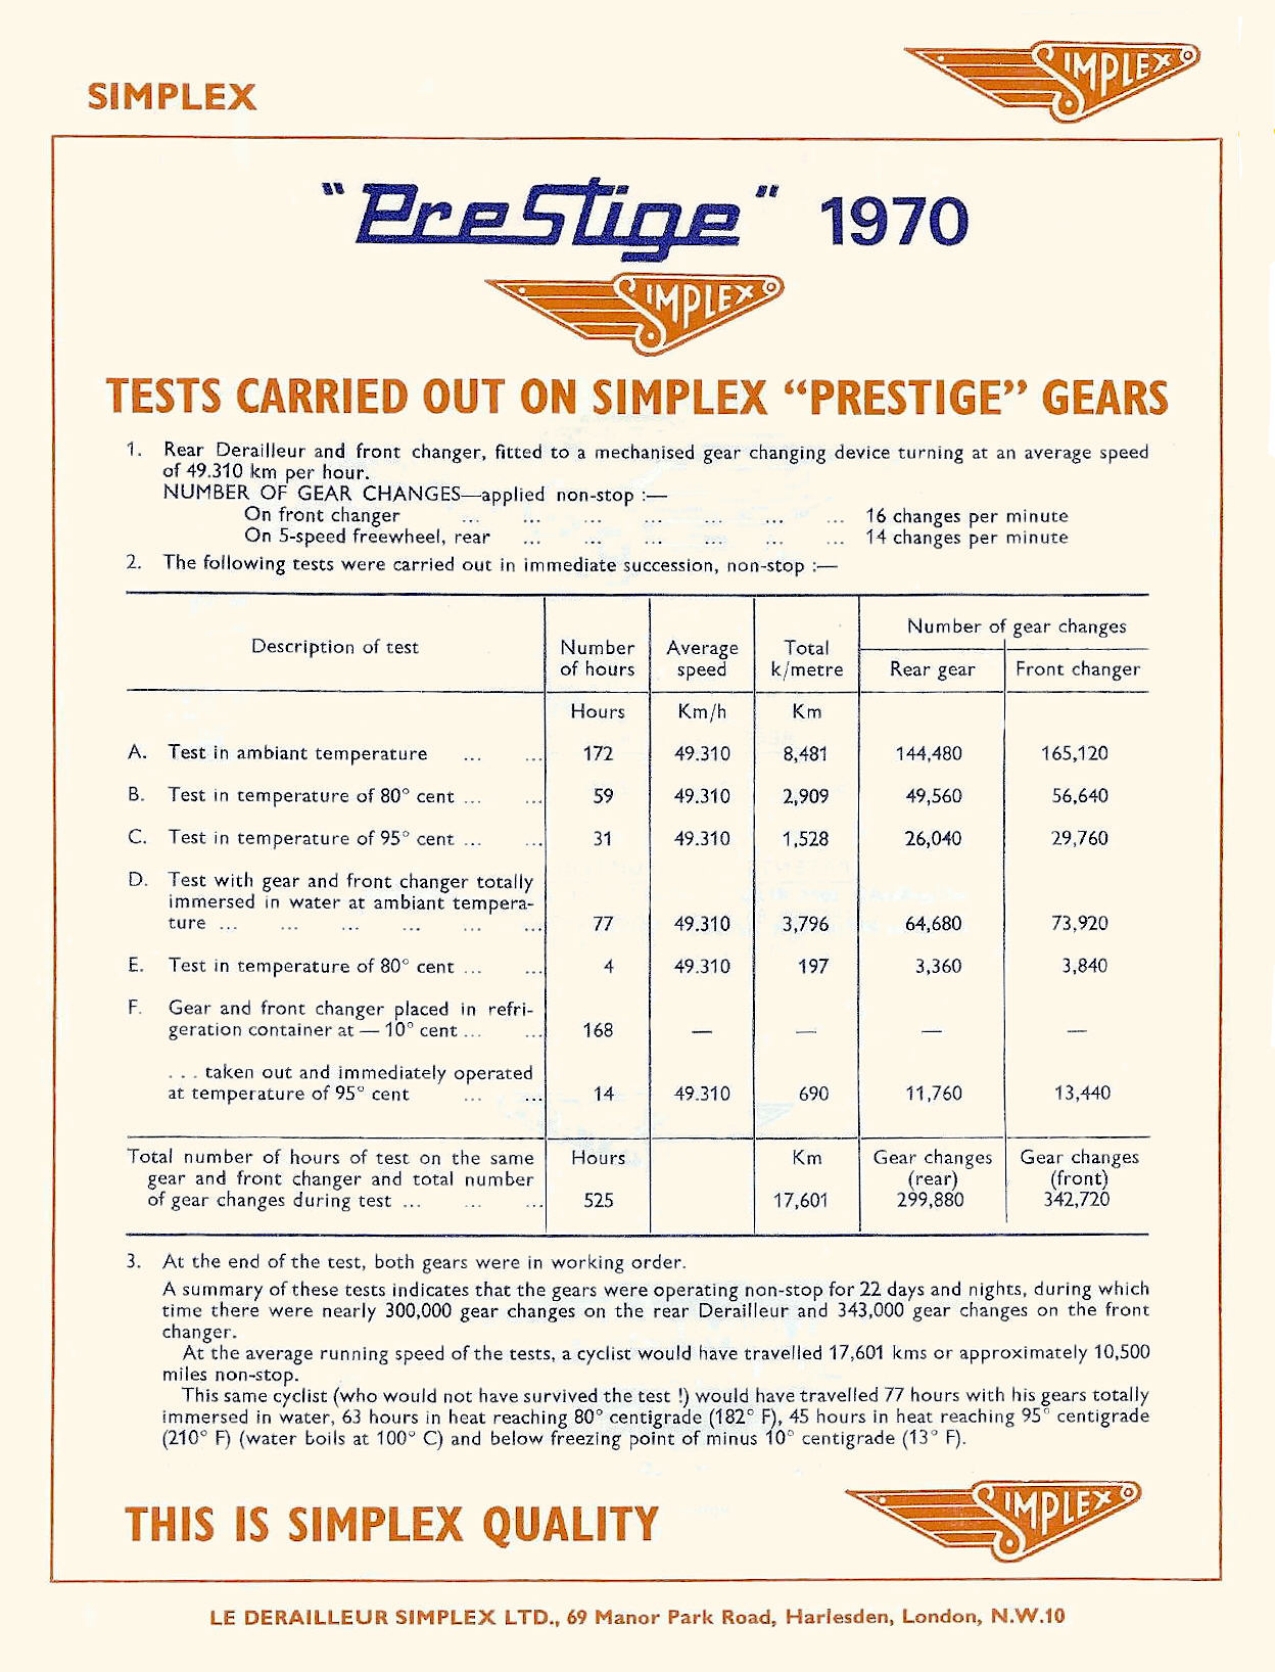 Simplex Prestige rear derailleur test data (1970)